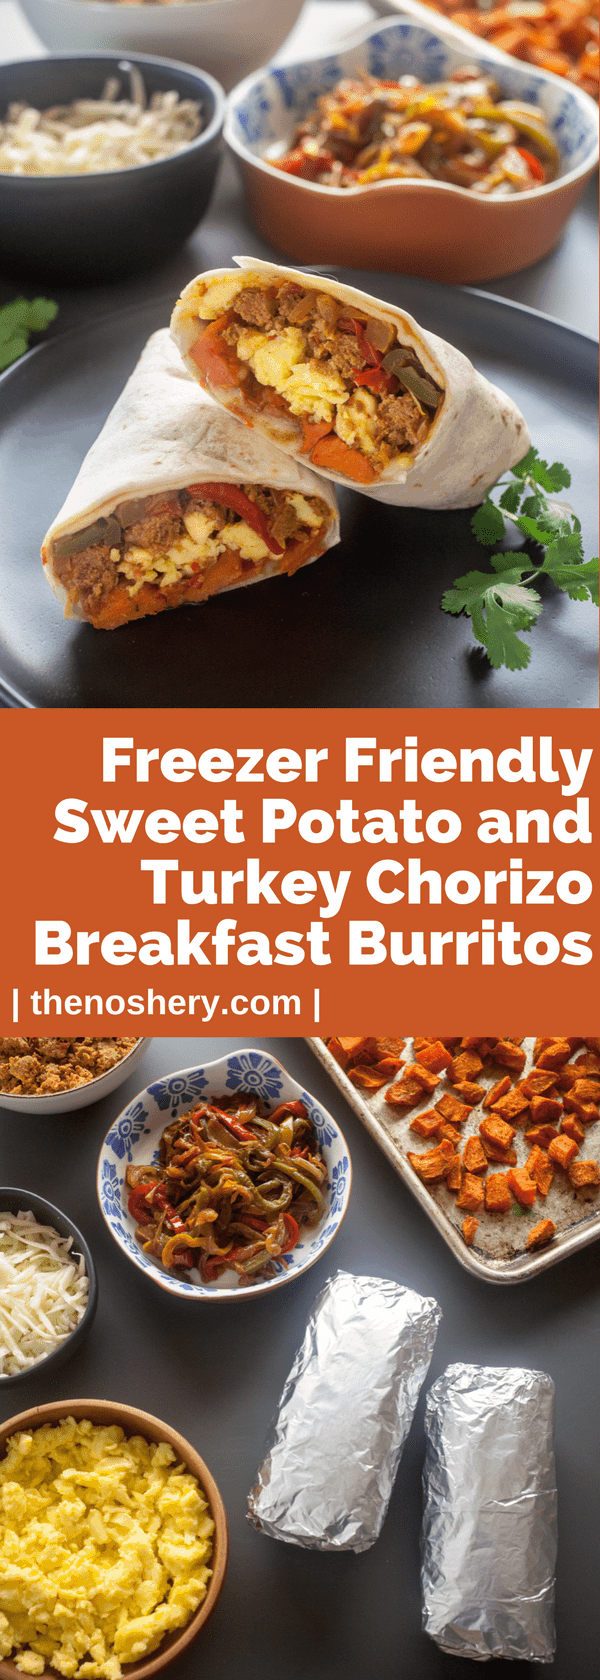 Freezer Breakfast Burritos with Sweet Potato + Turkey Chorizo